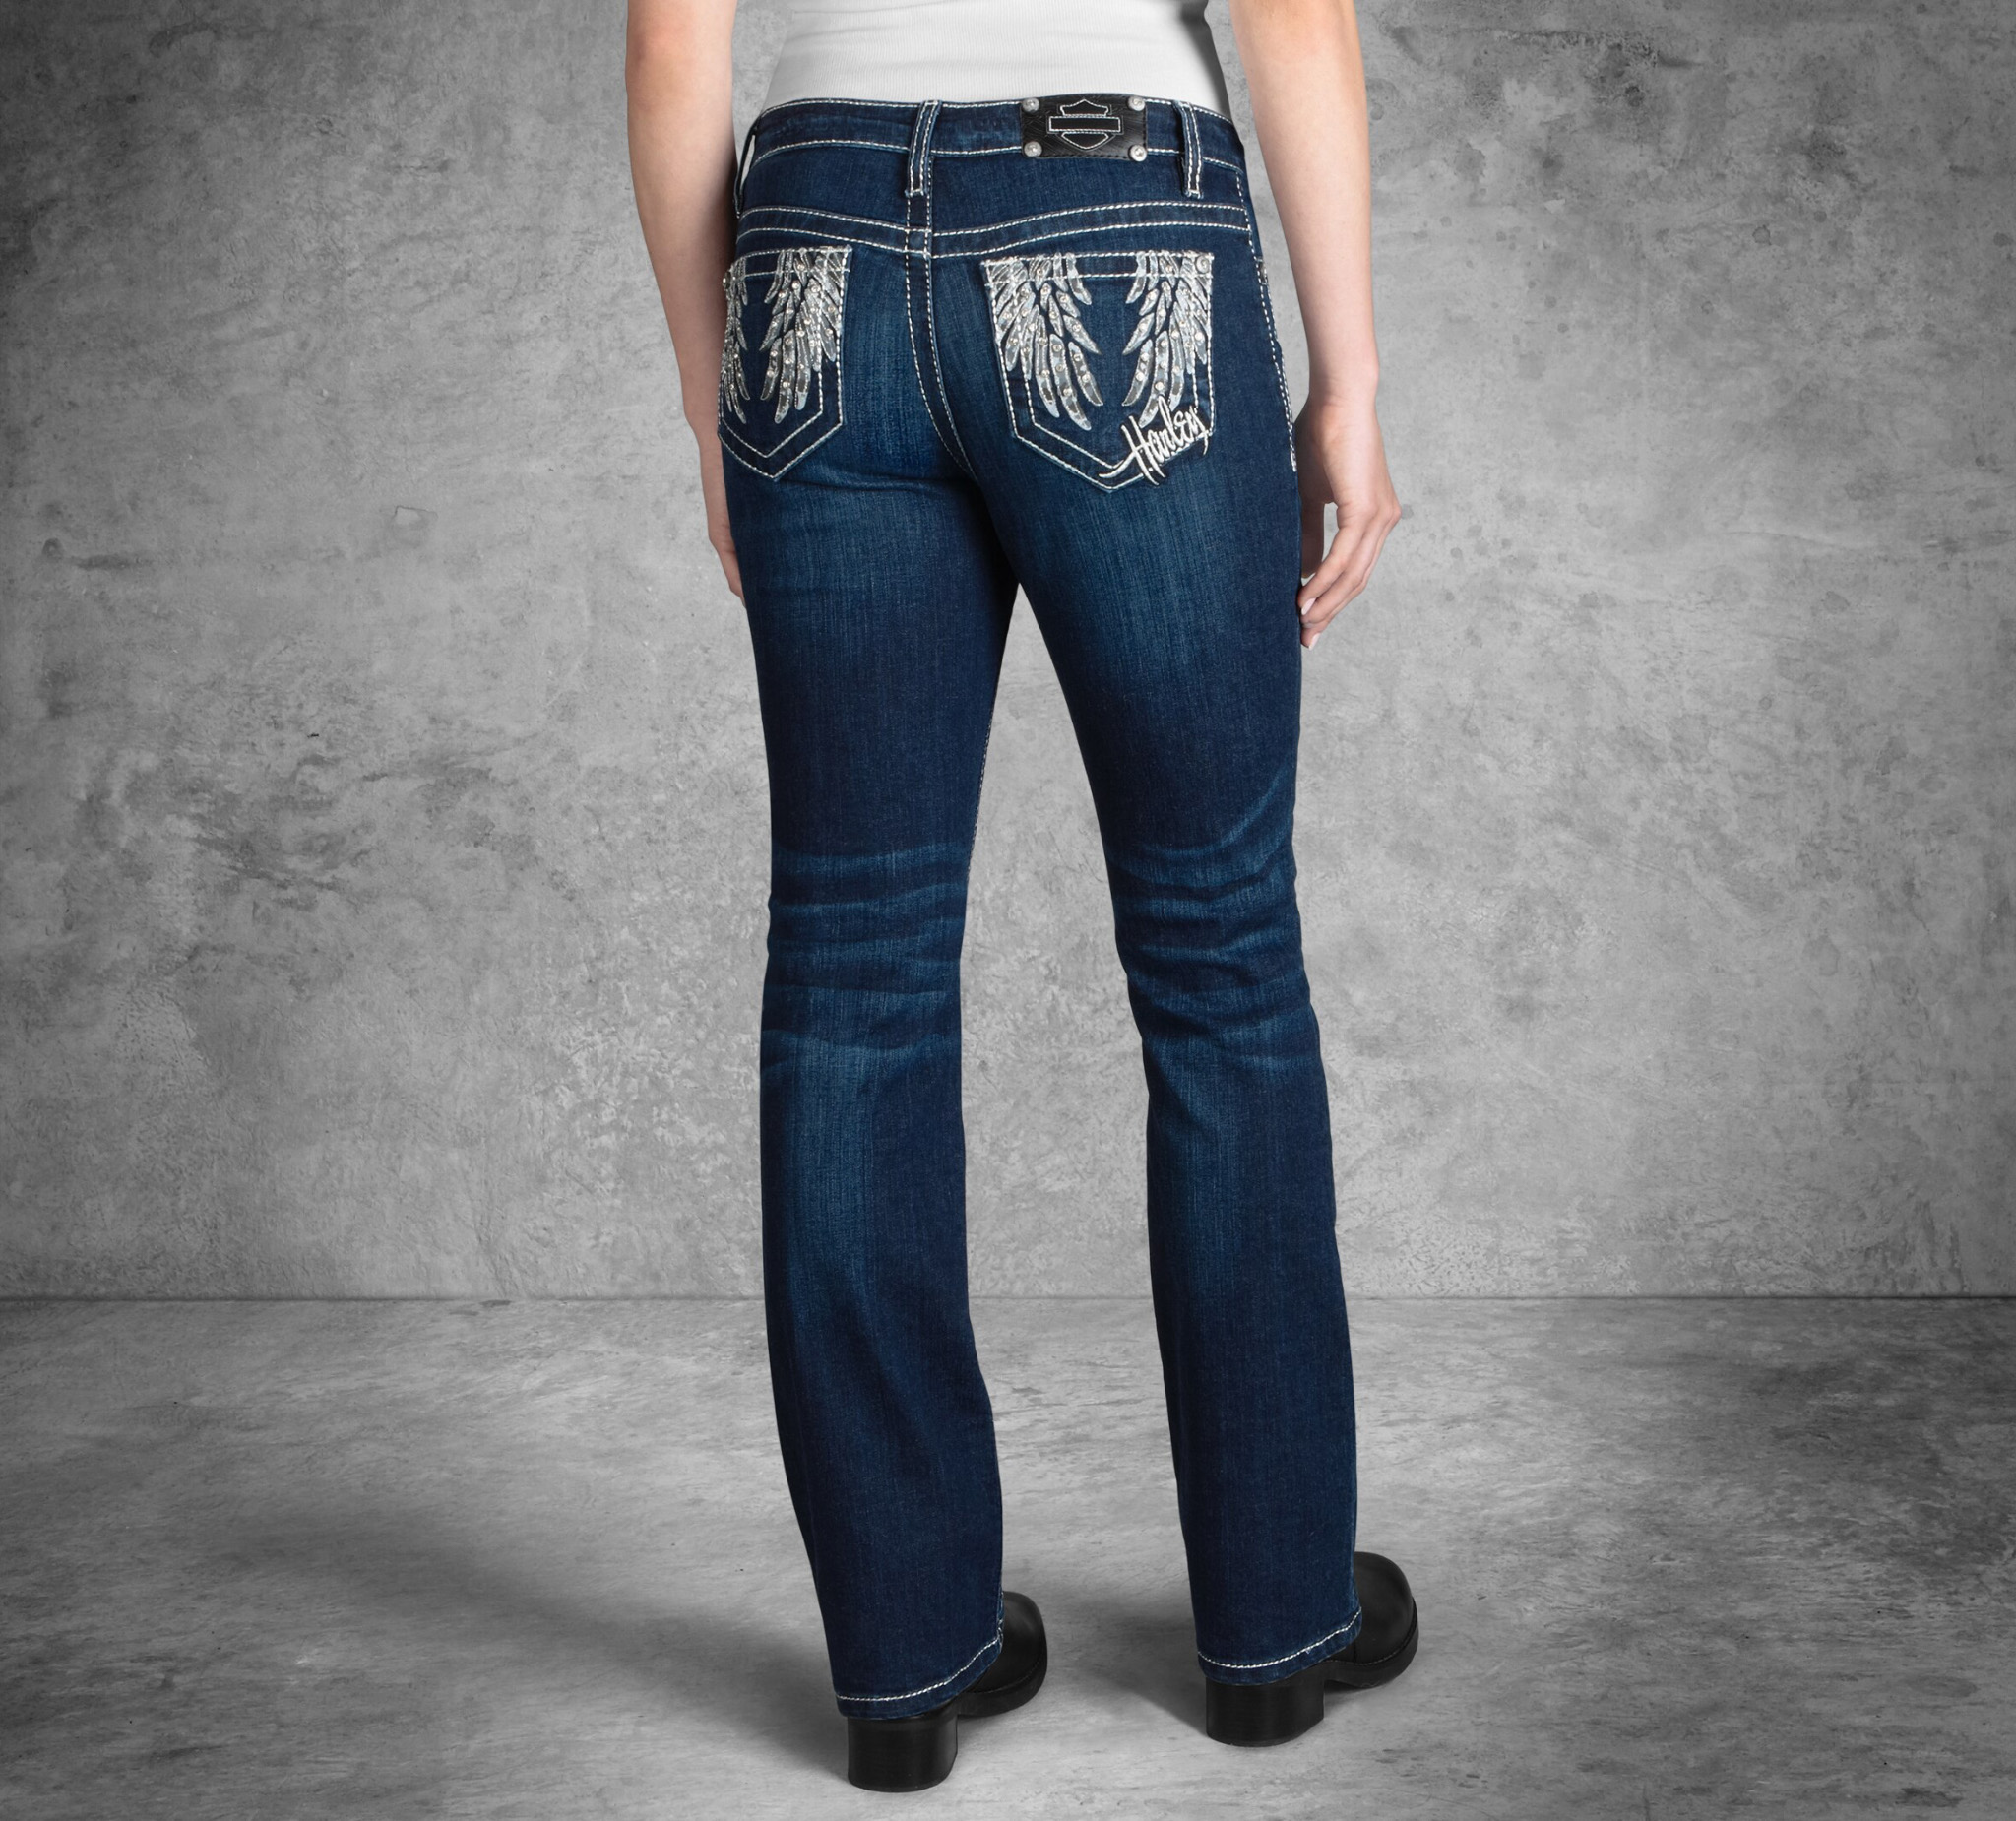 Women's Low Rise Stretch Denim Jeans Rhinestone Embellished Pockets